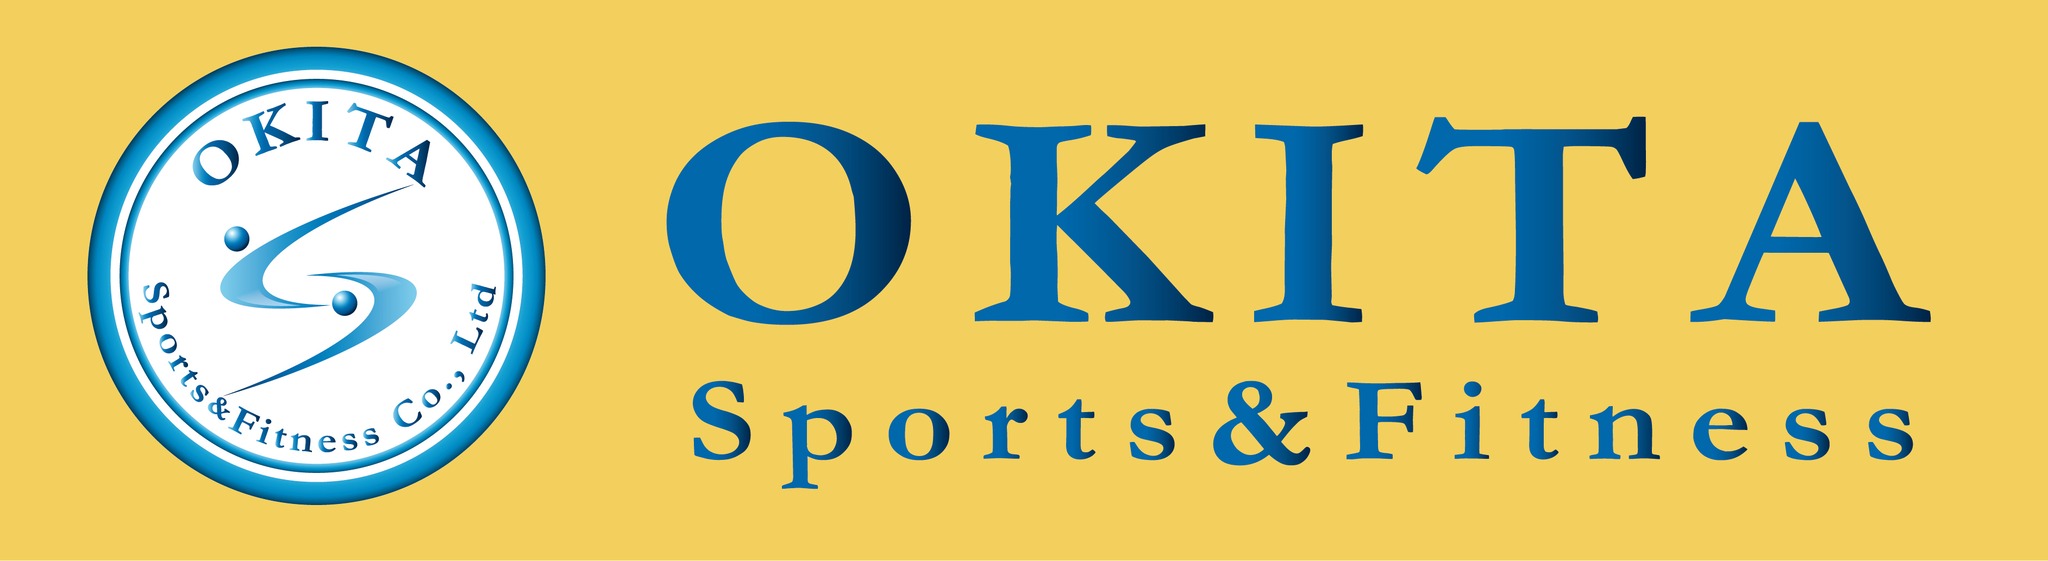 OKITA Sports&Fitness